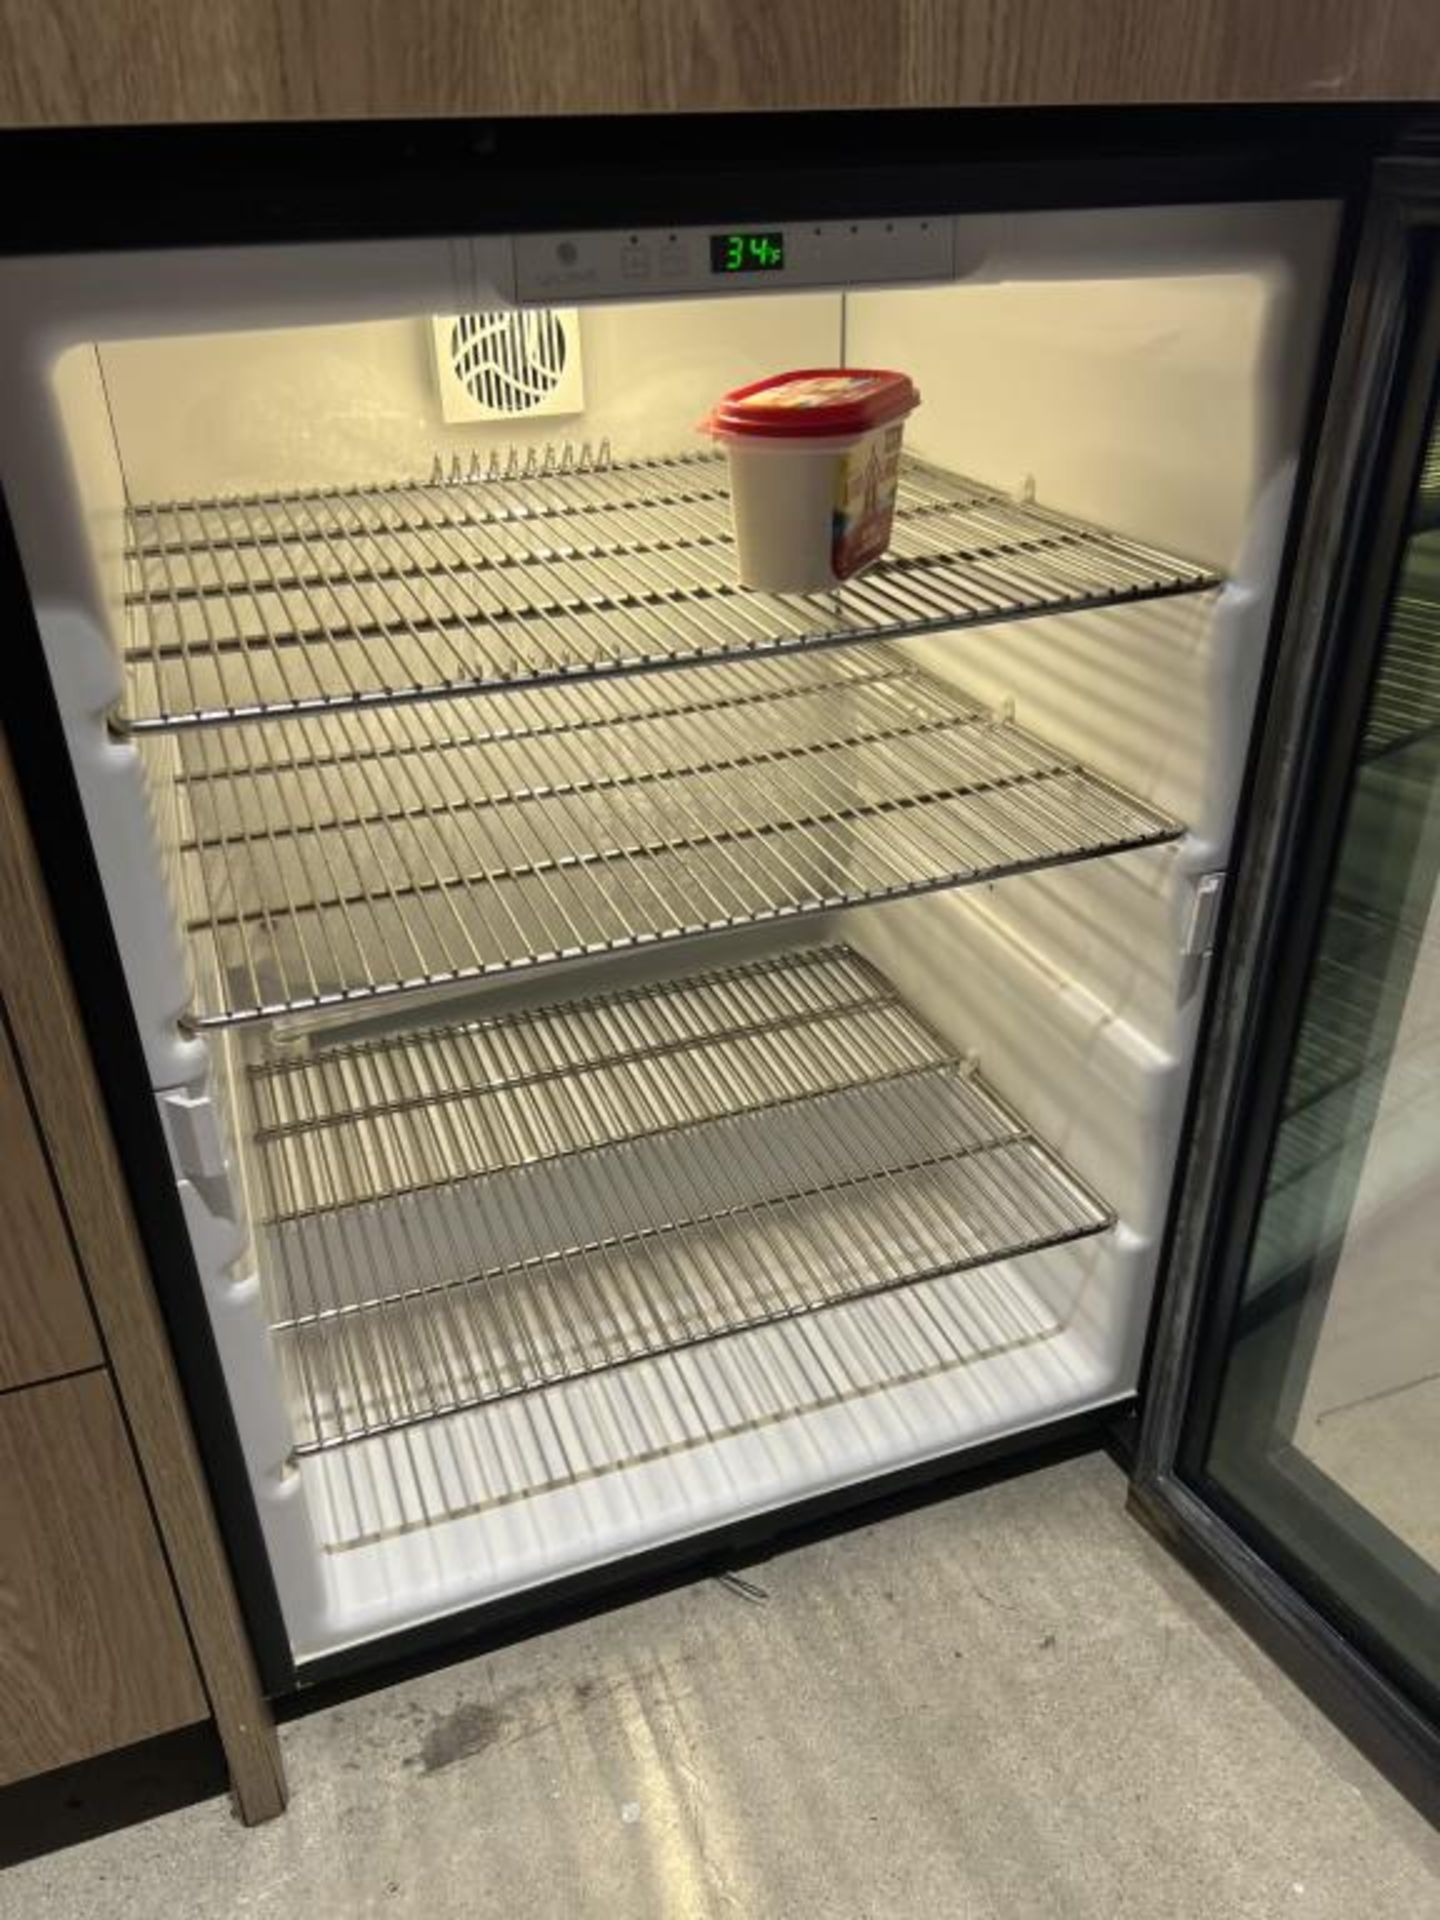 Uline Undercounted Refrigerator - Image 2 of 3